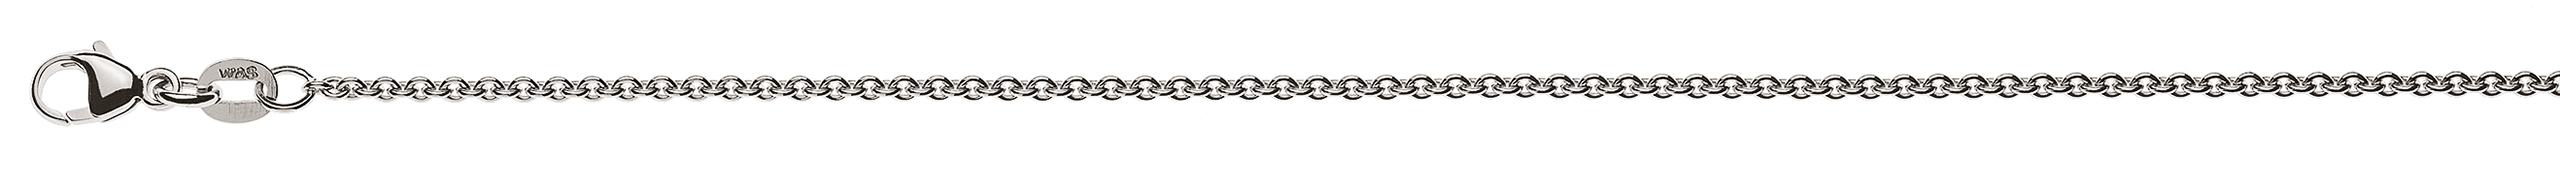 AURONOS Style Necklace White Gold 9K Round Anchor 55cm 1.7mm